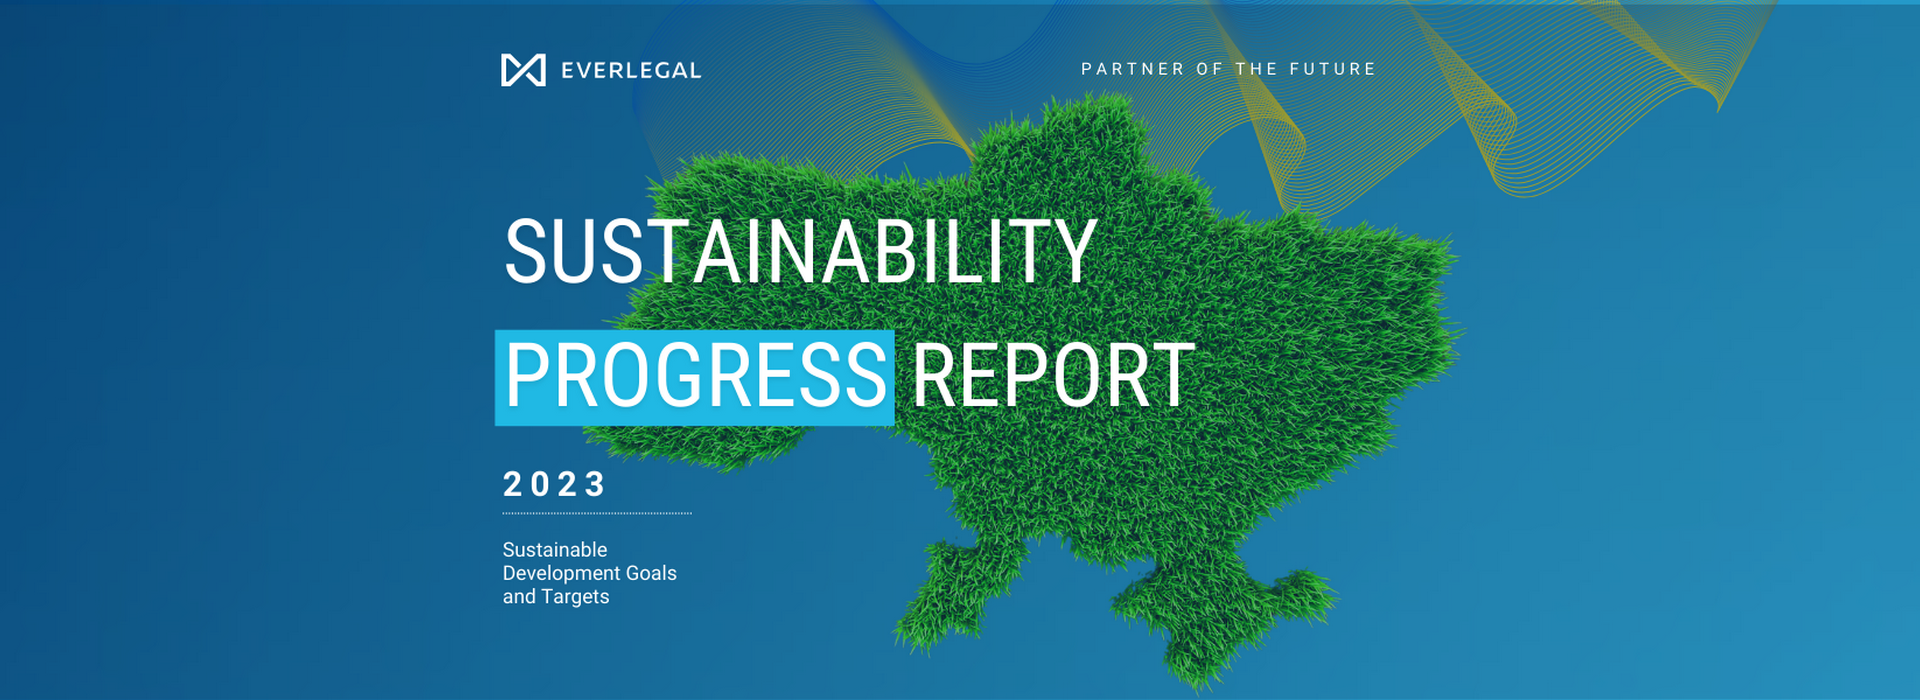 EVERLEGAL Sustainability Progress Report 2023